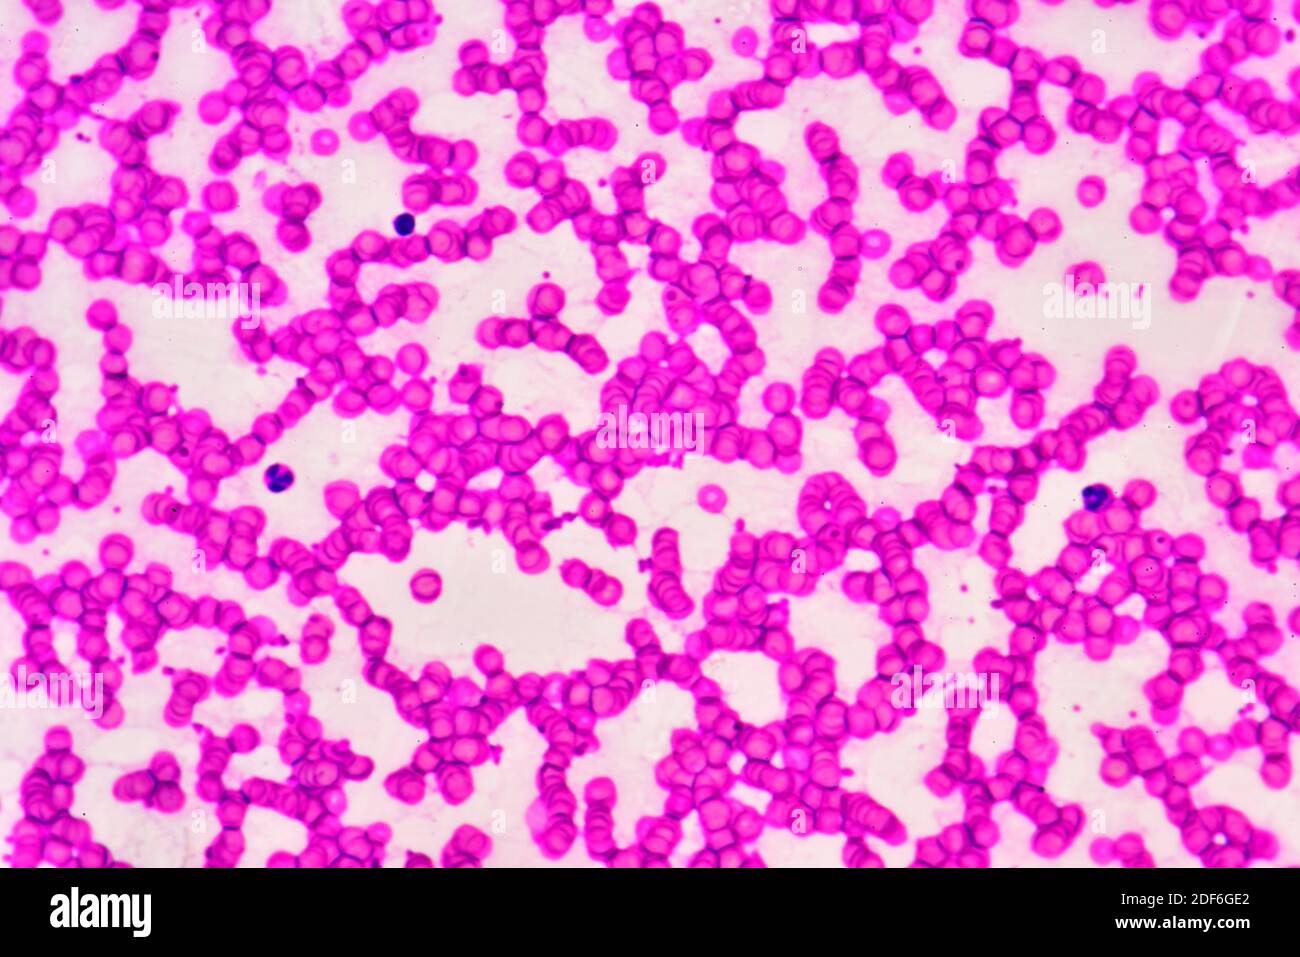 Mammal blood showing erythrocytes and leukocytes. Optical microscope X400. Stock Photo